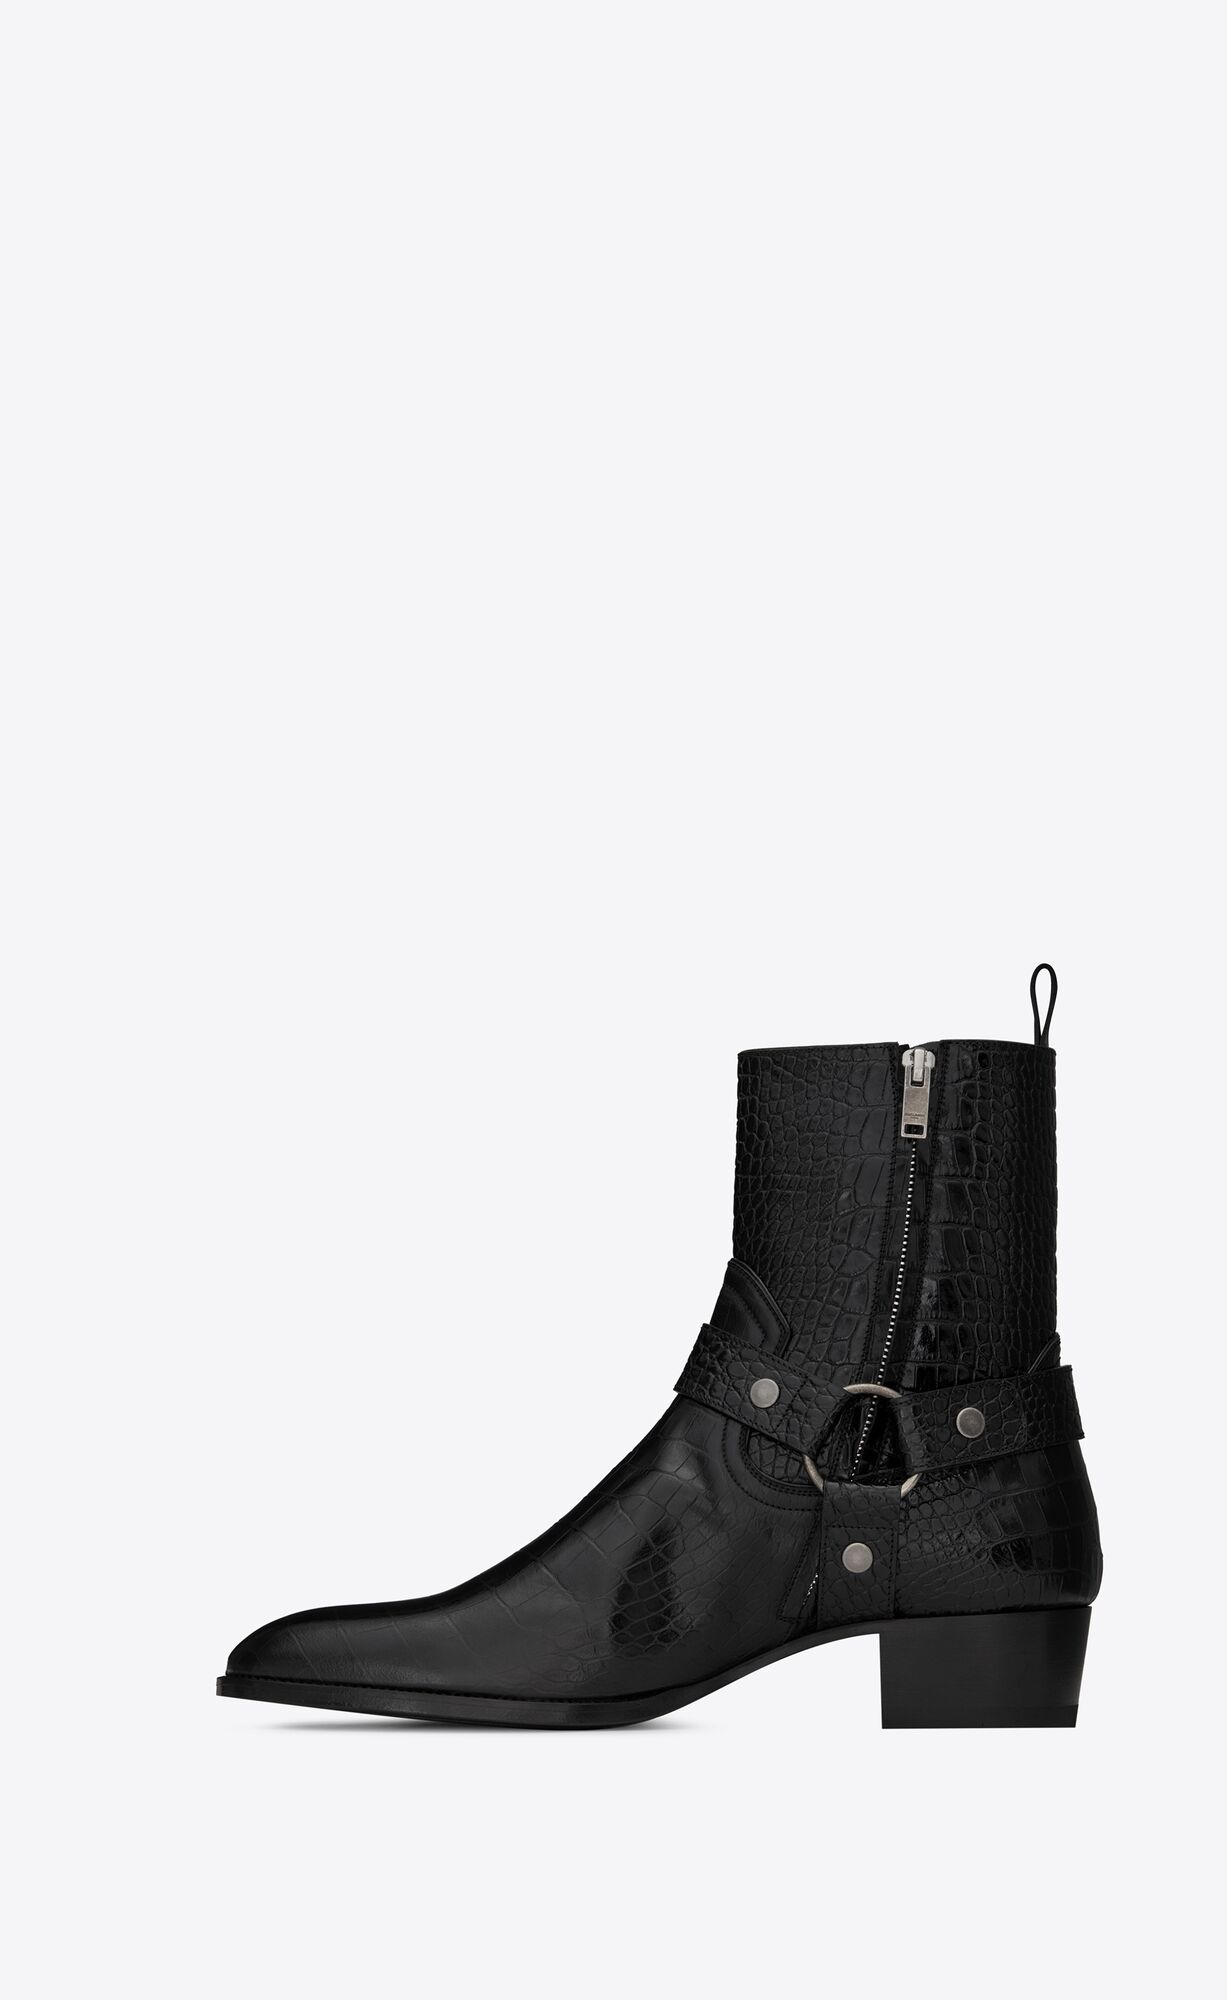 WYATT harness boots in crocodile-embossed leather | Saint Laurent ...